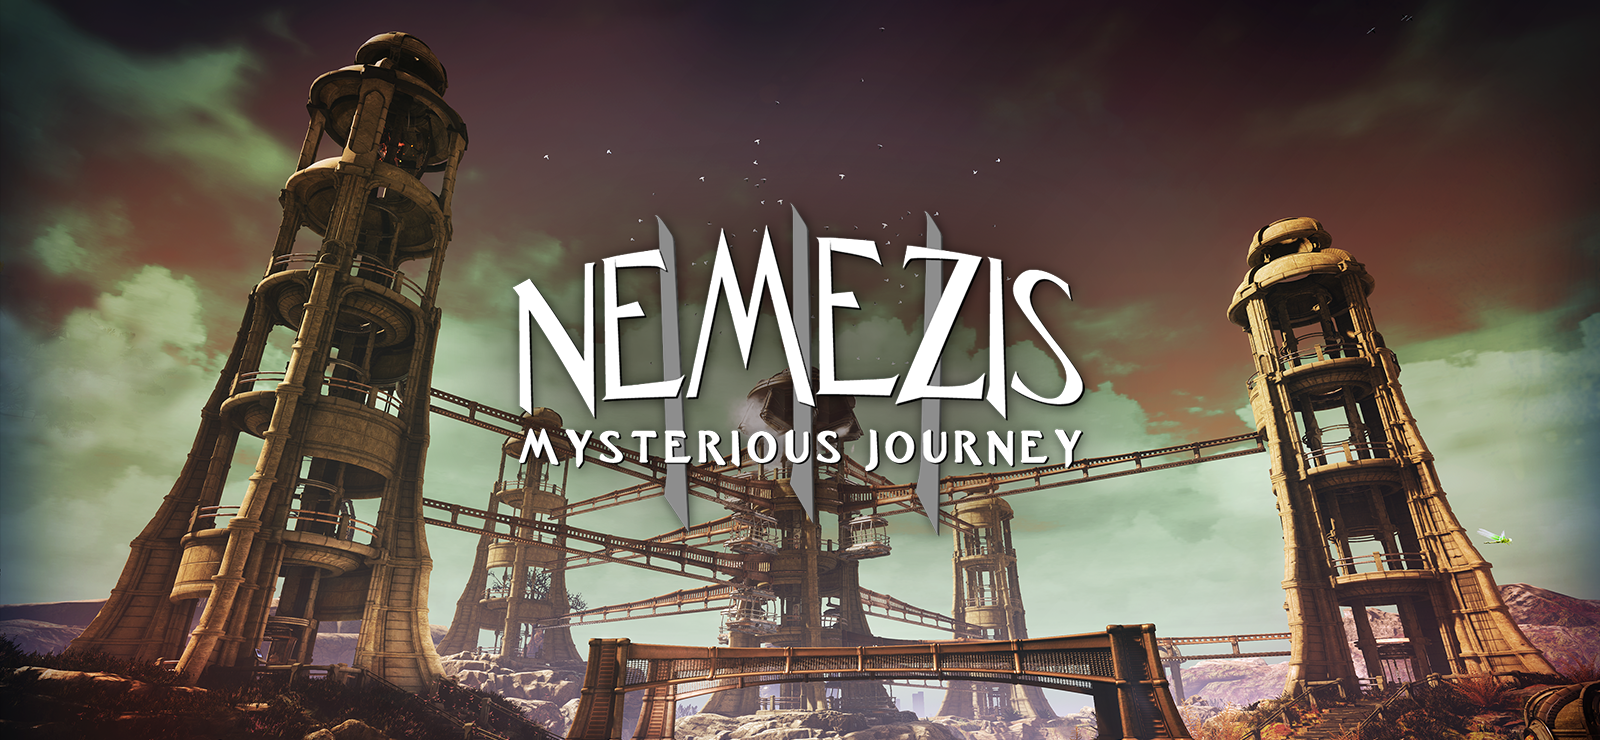 Nemezis: Mysterious Journey III Deluxe Edition